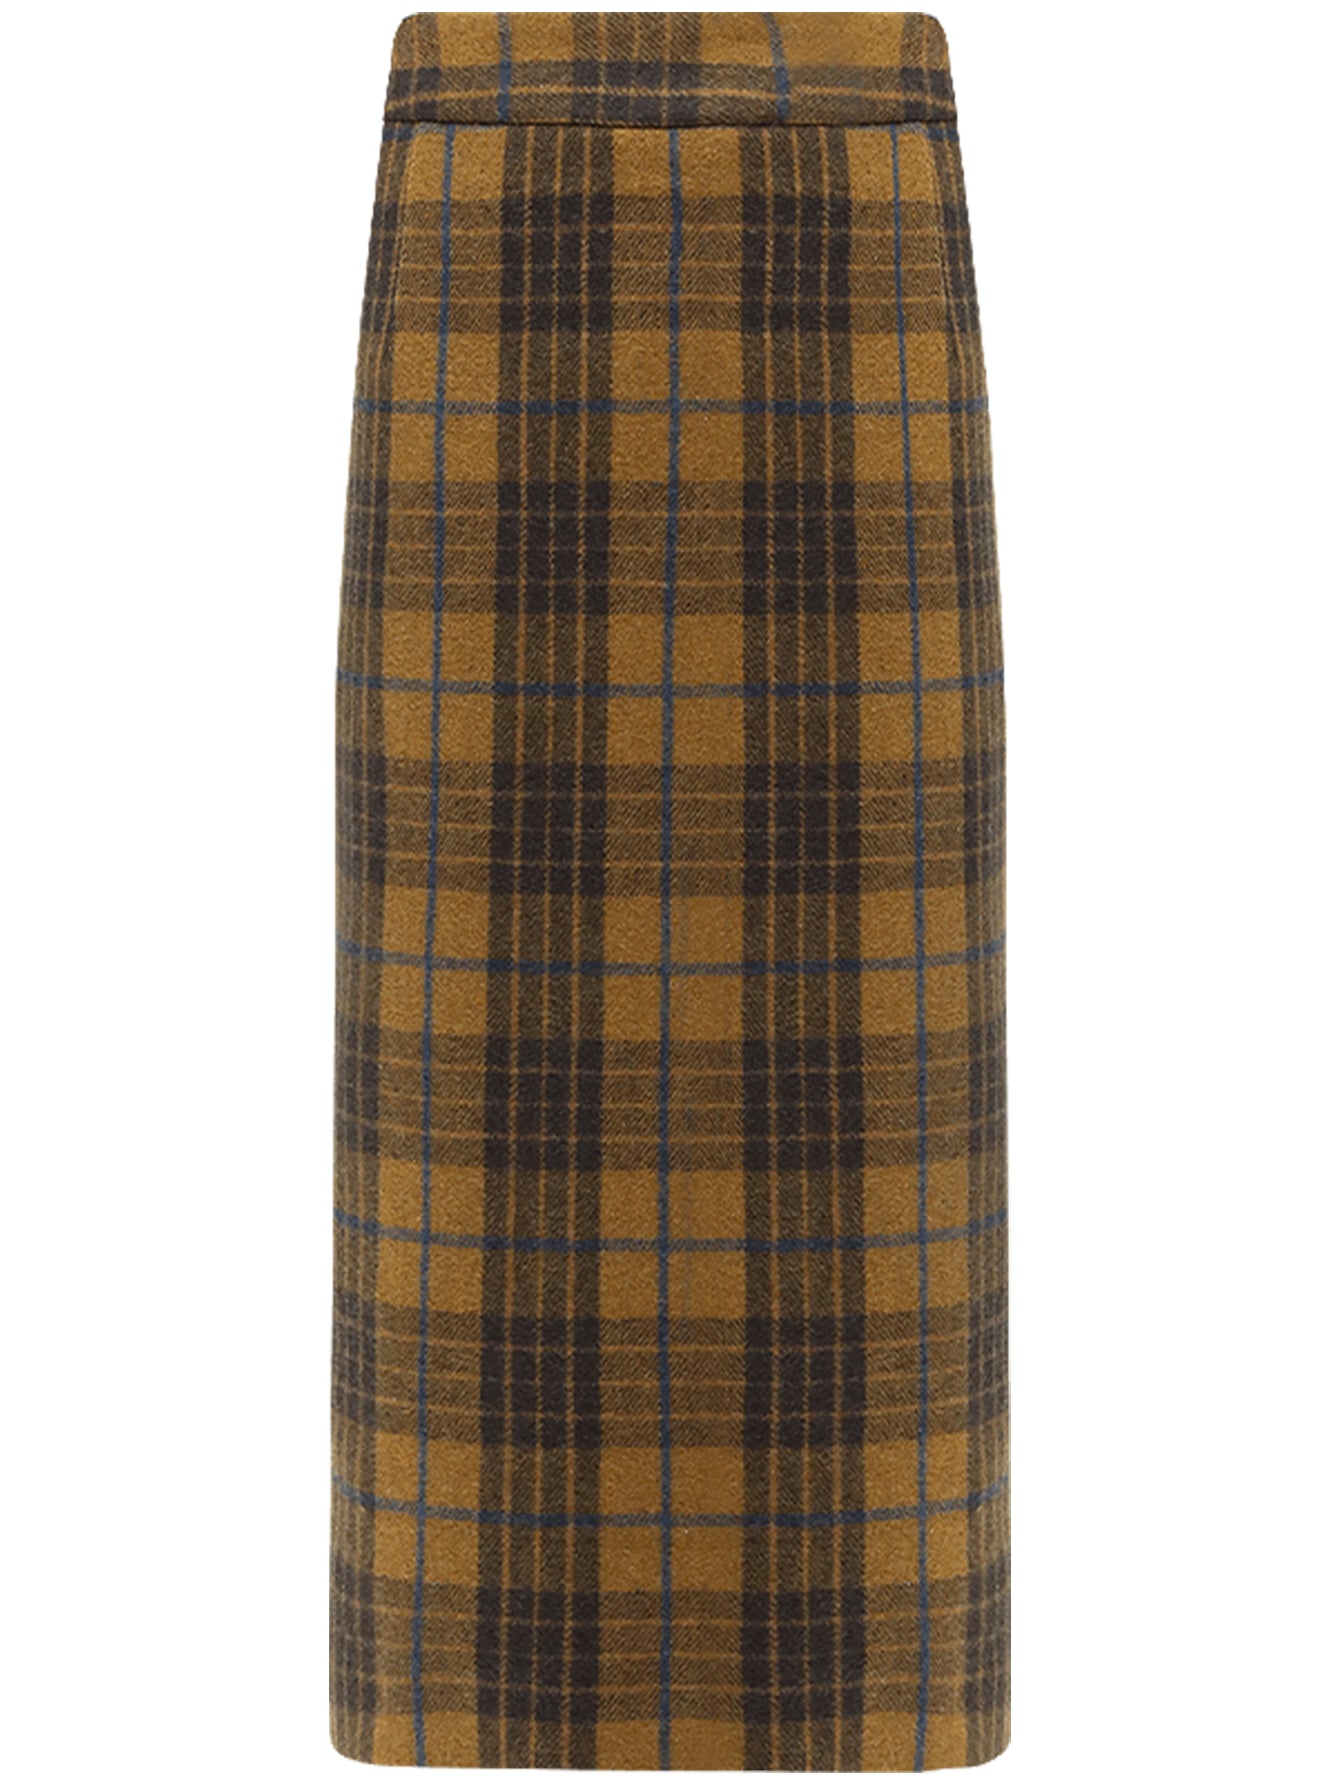 british-style-brown-plaid-midi-skirt_all_brown_4.jpg